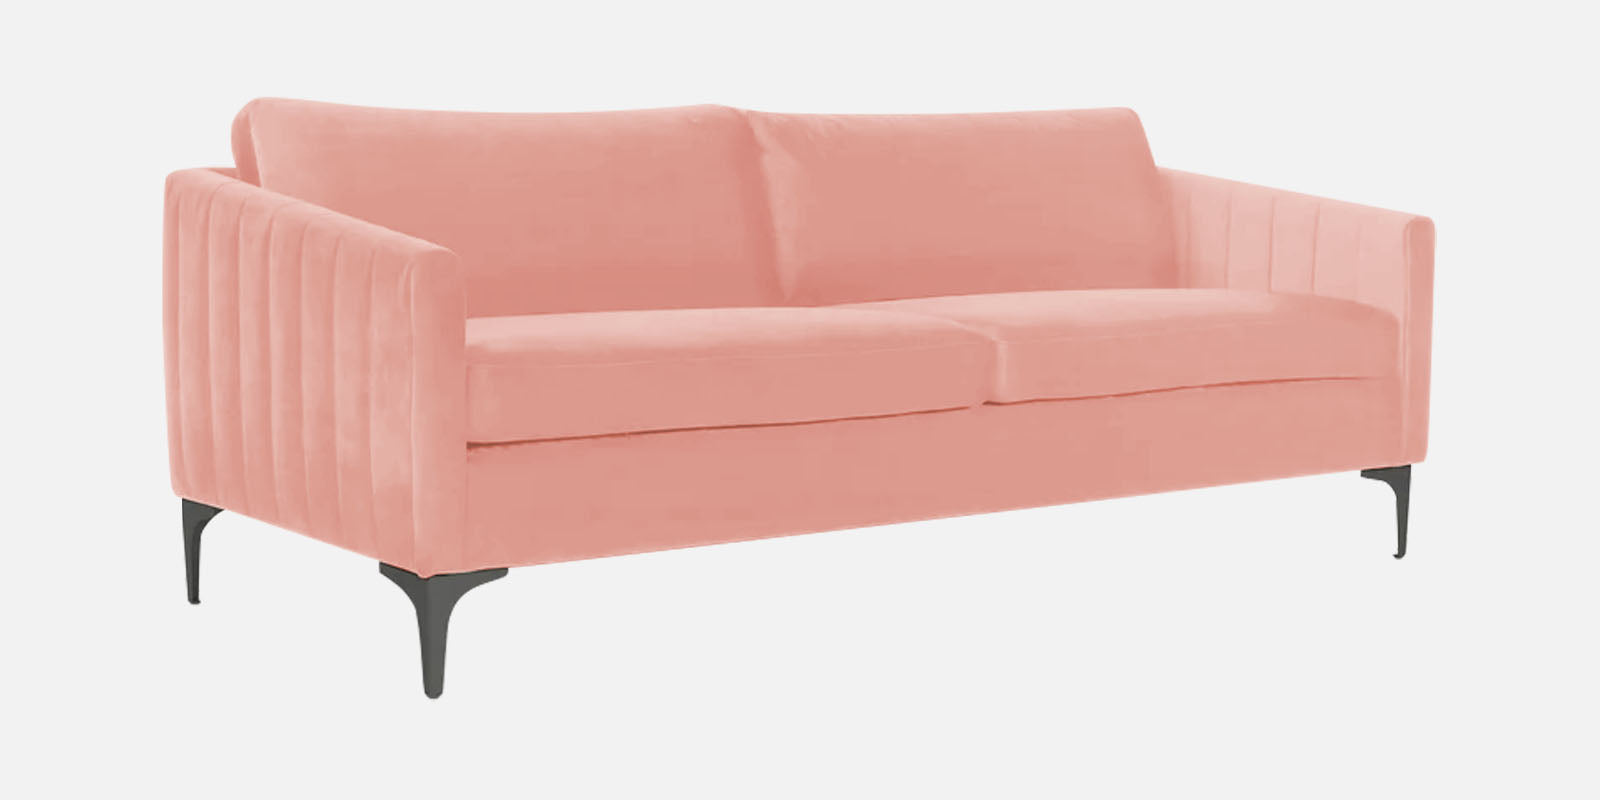 Haru Velvet 3 Seater Sofa in Blush Pink Colour